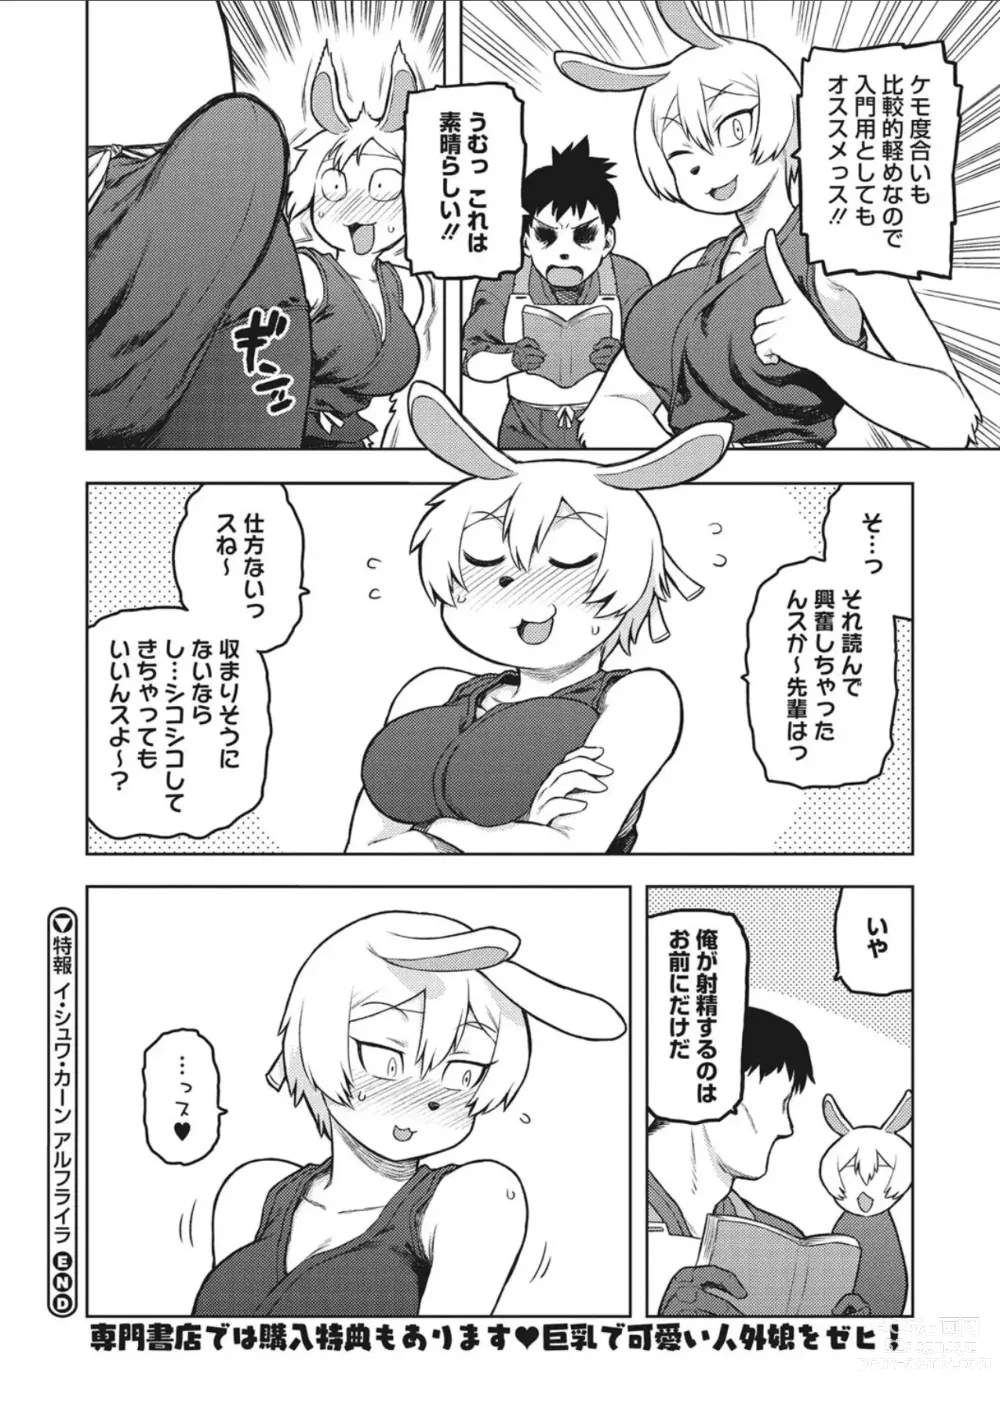 Page 150 of manga COMIC GAIRA Vol. 10